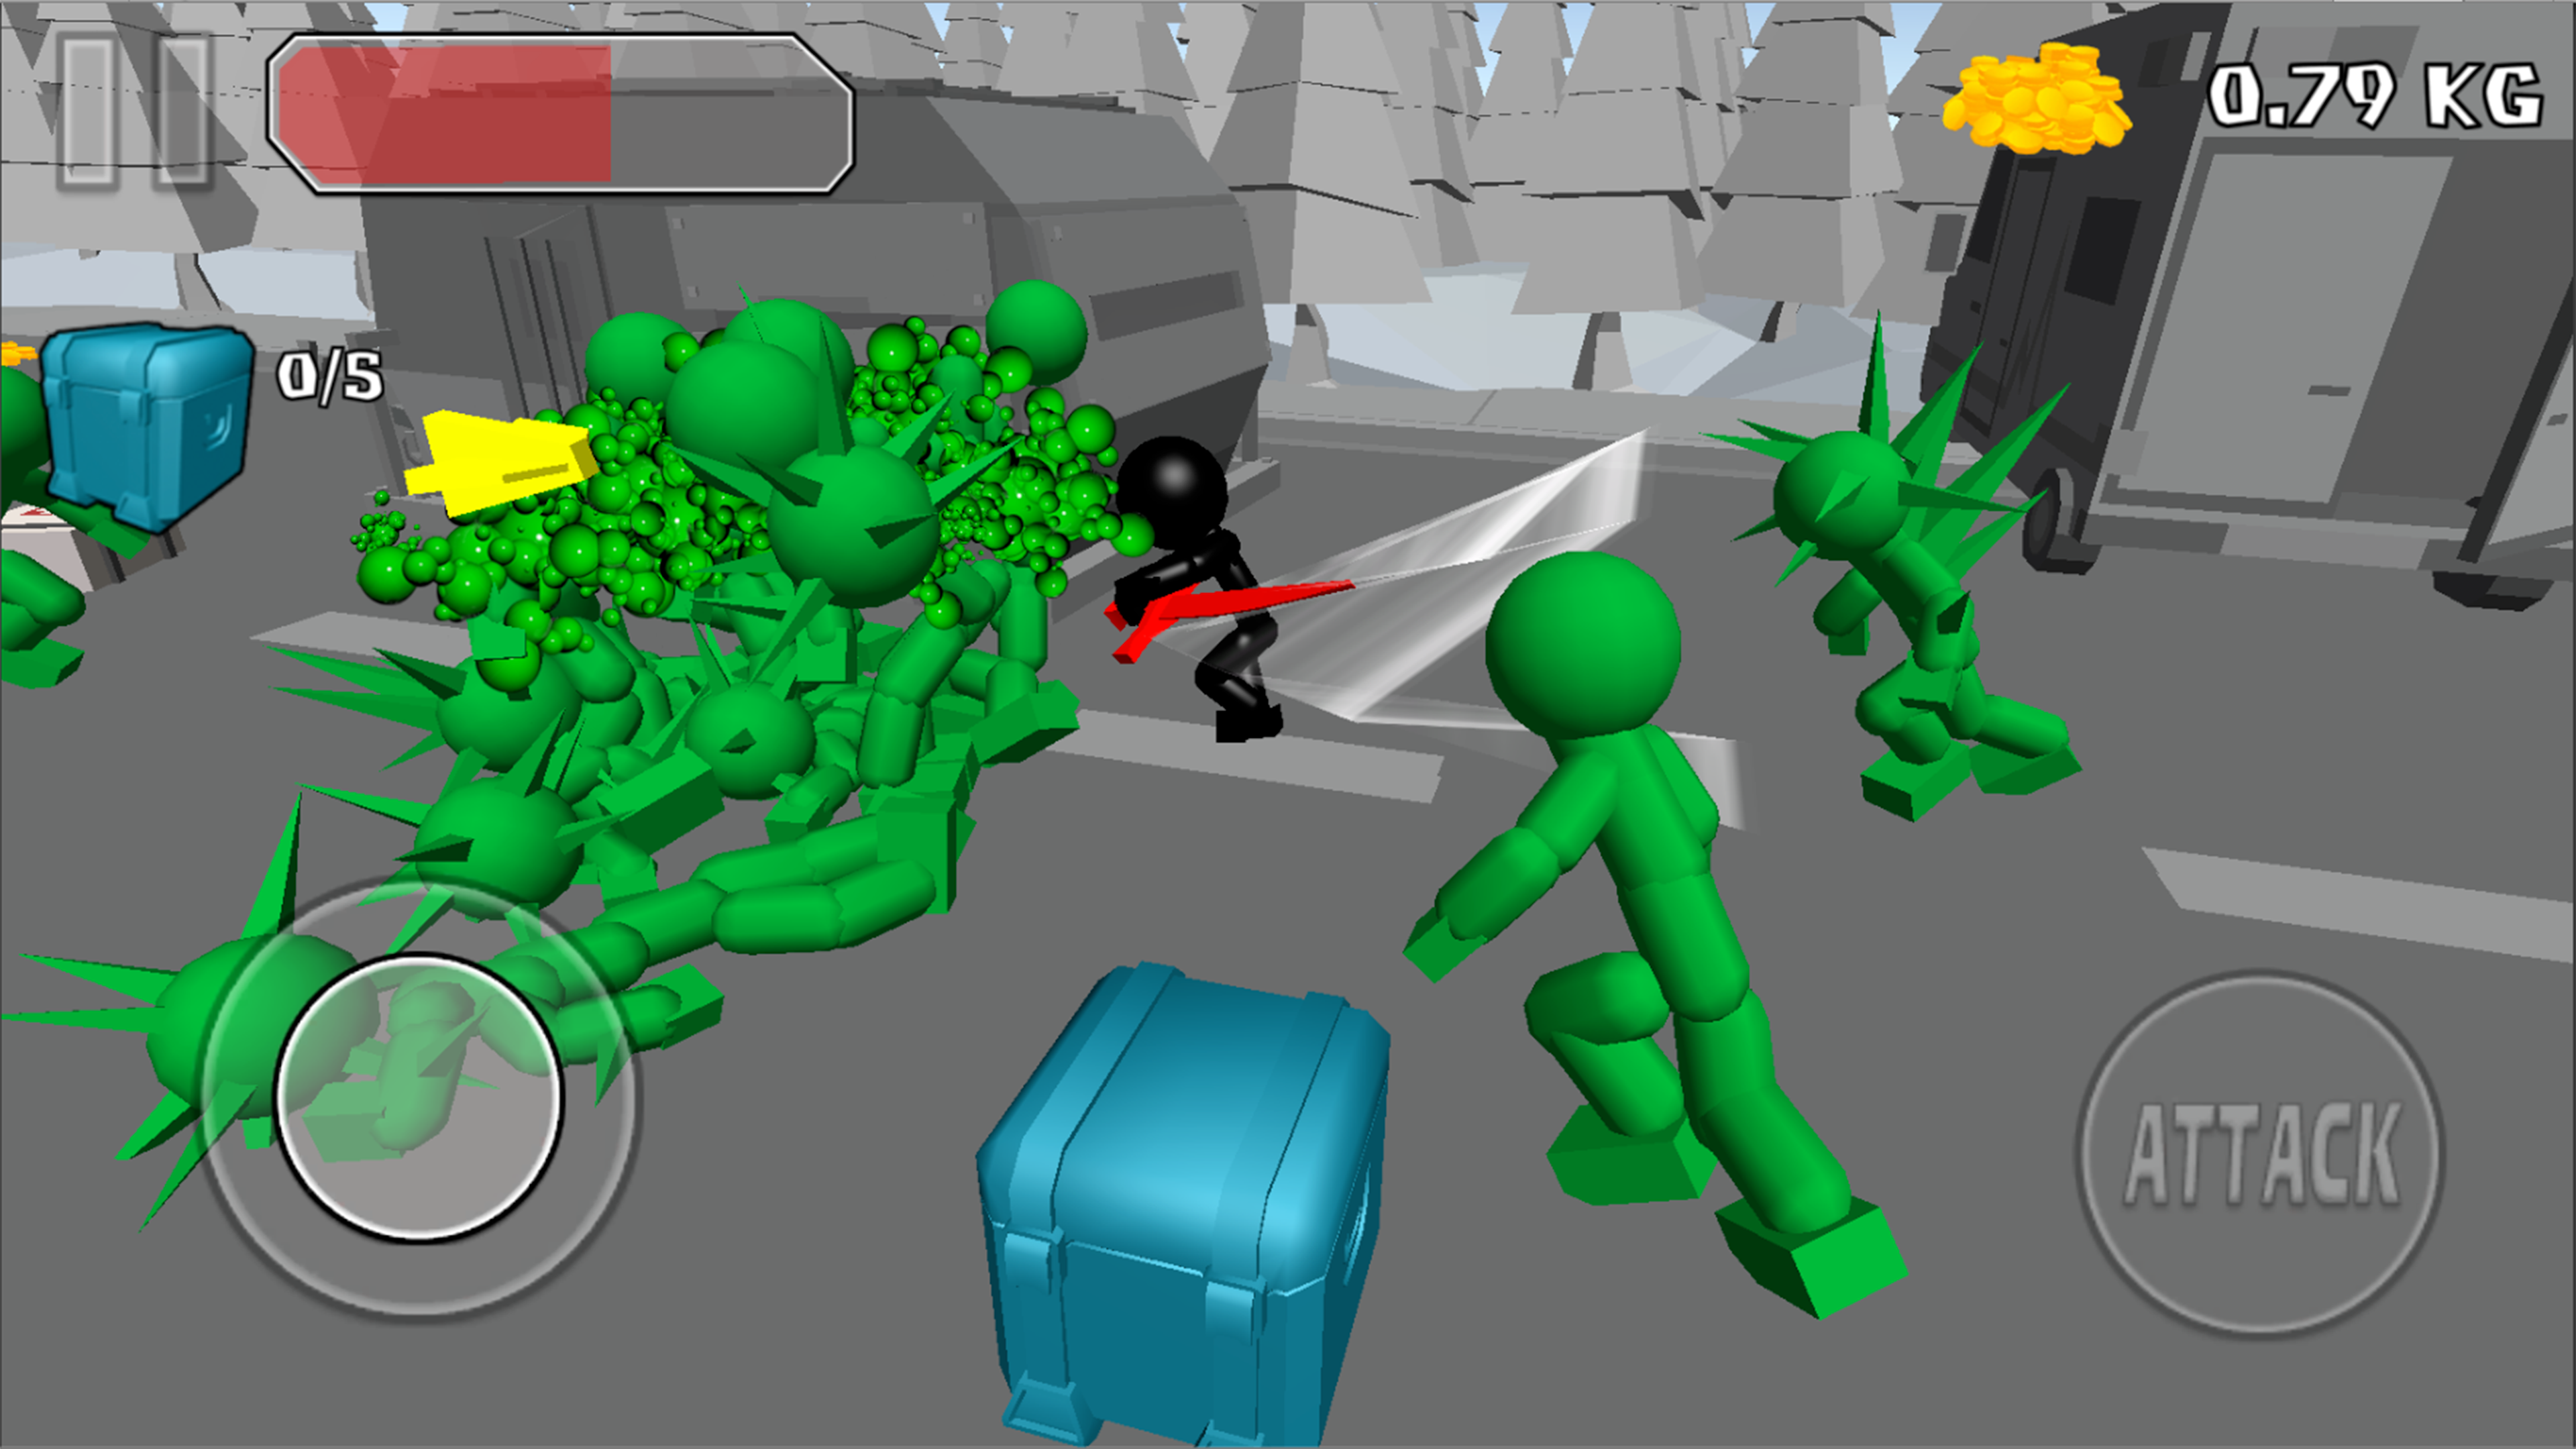 Stickman Killing Zombie 3D screenshot game